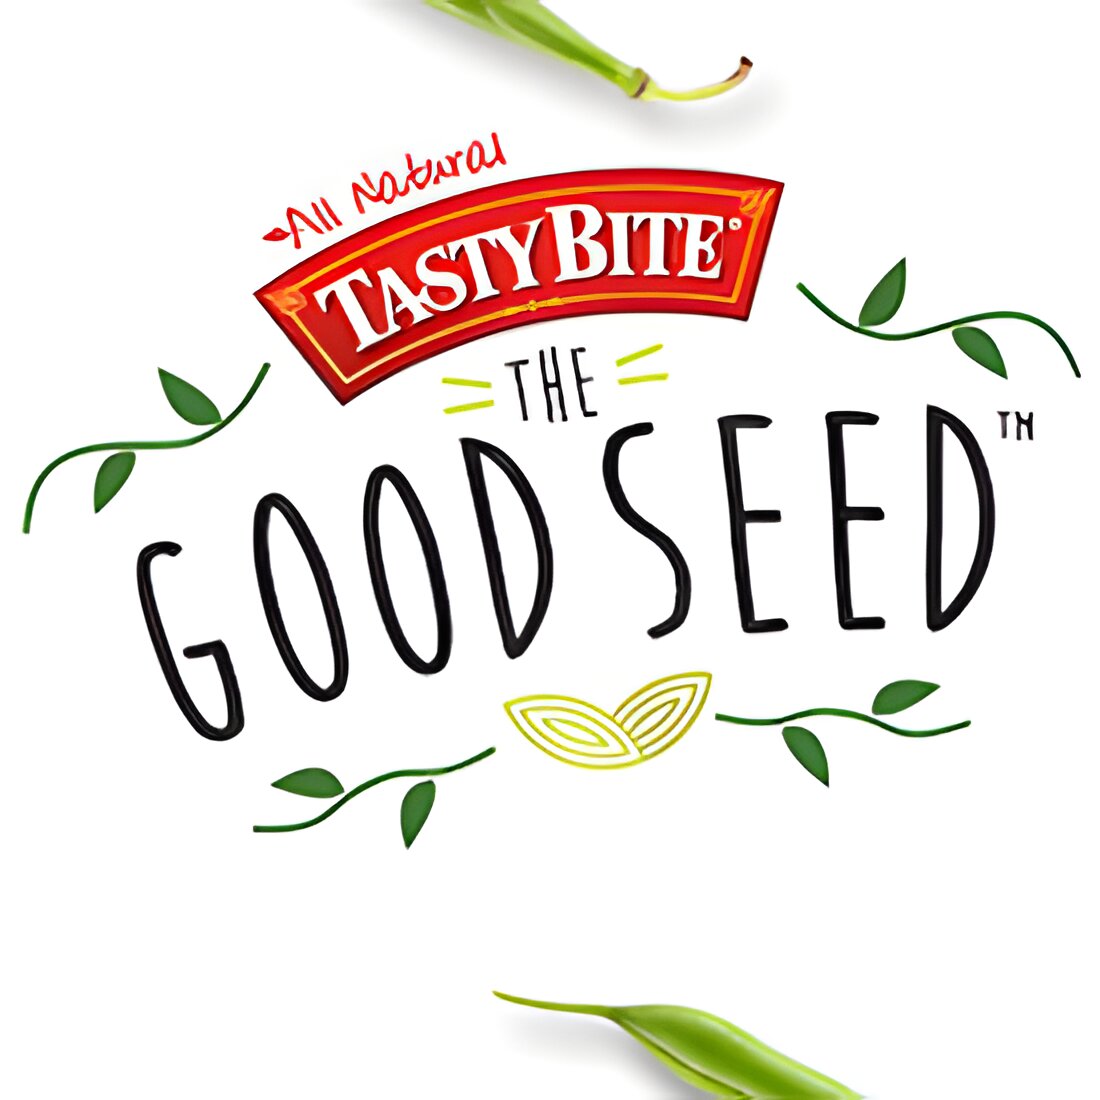 Free Tasty Bite Green Bean Seeds